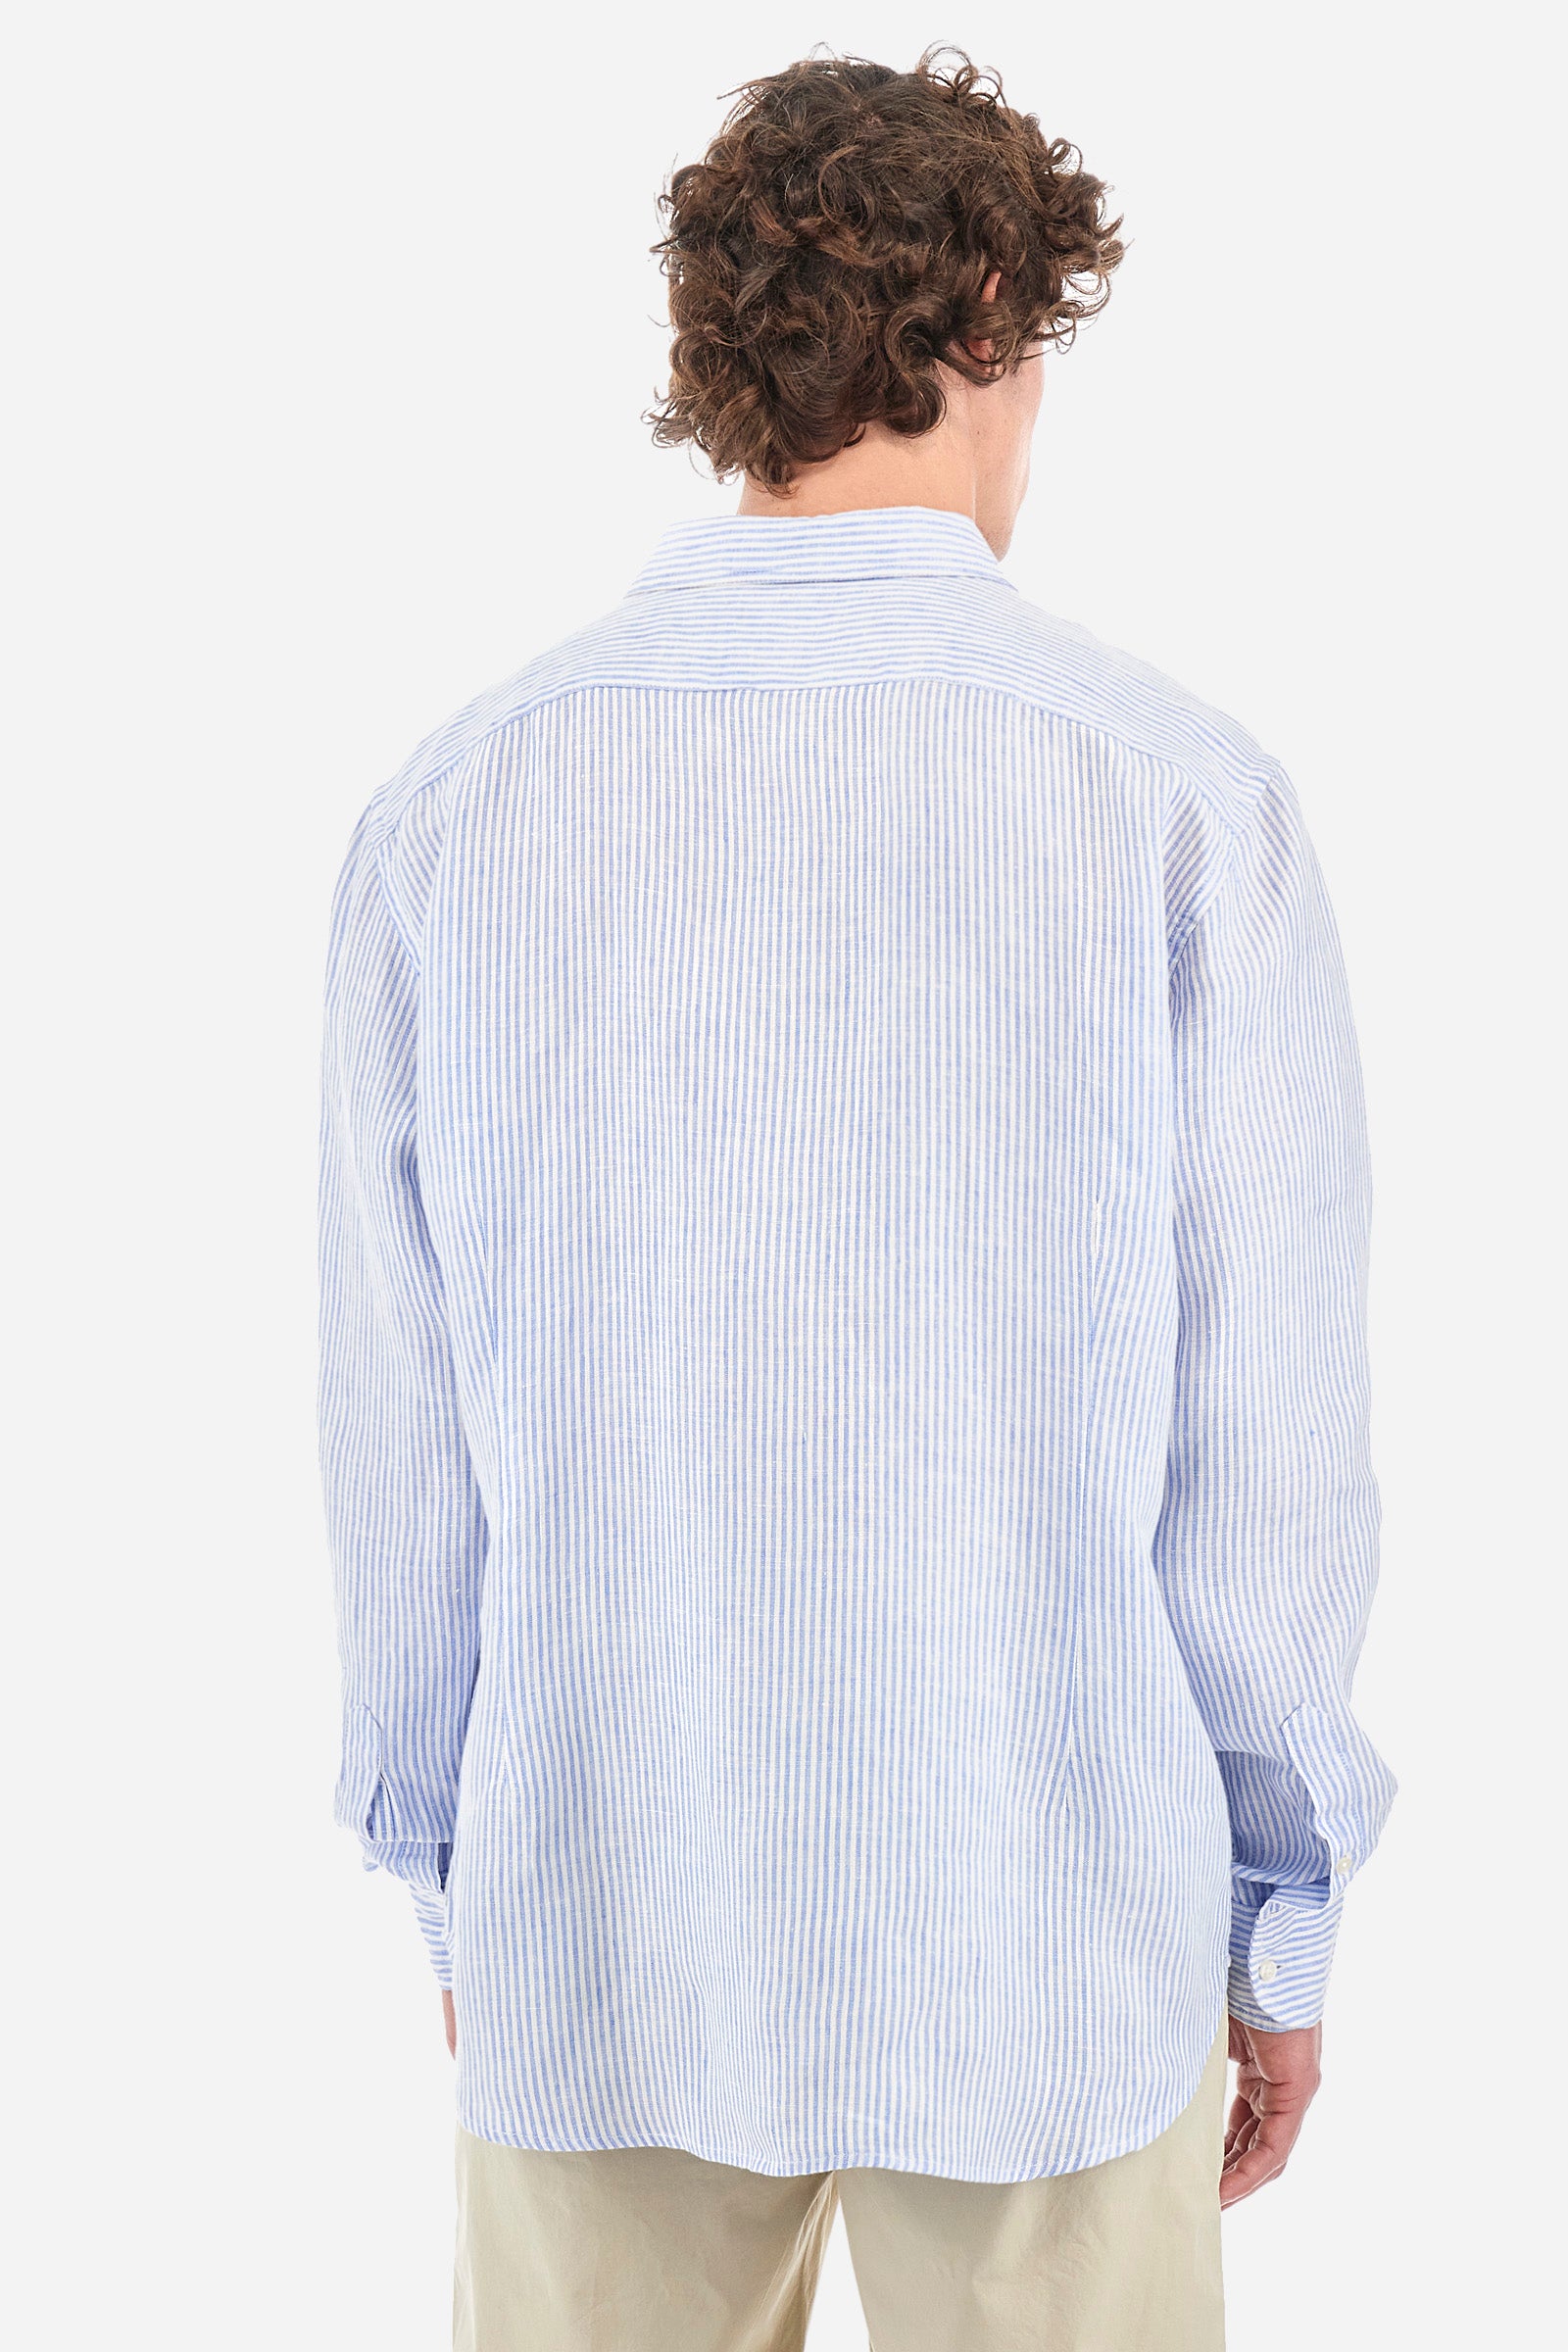 Cotton shirt with a striped pprint - Rodolfo